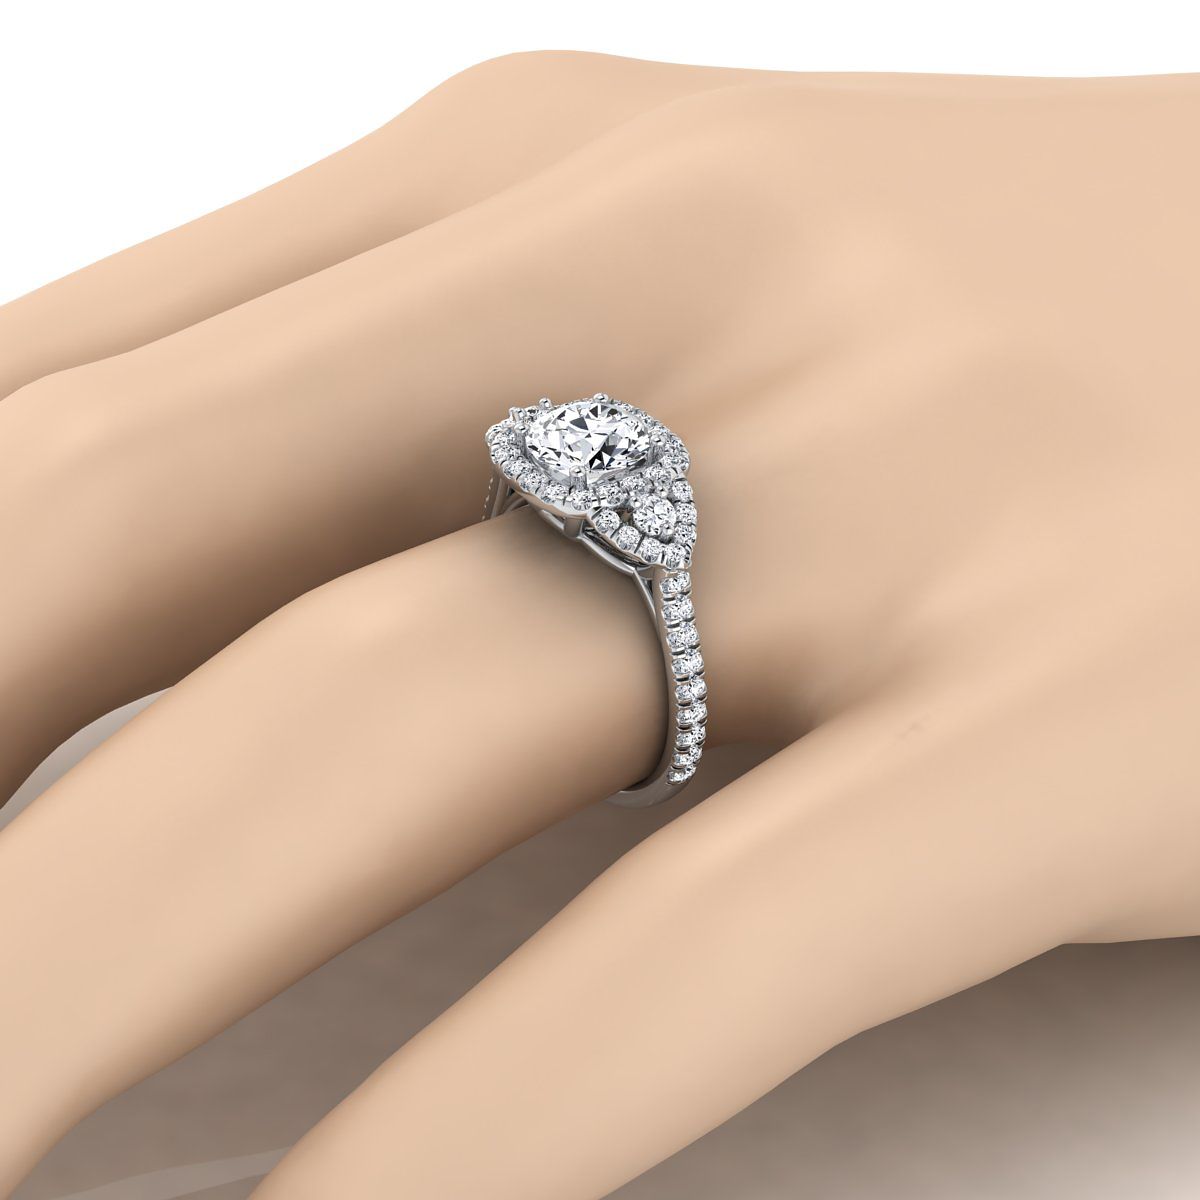 14K White Gold Round Brilliant Citrine Delicate Three Stone Halo Pave Diamond Engagement Ring -5/8ctw